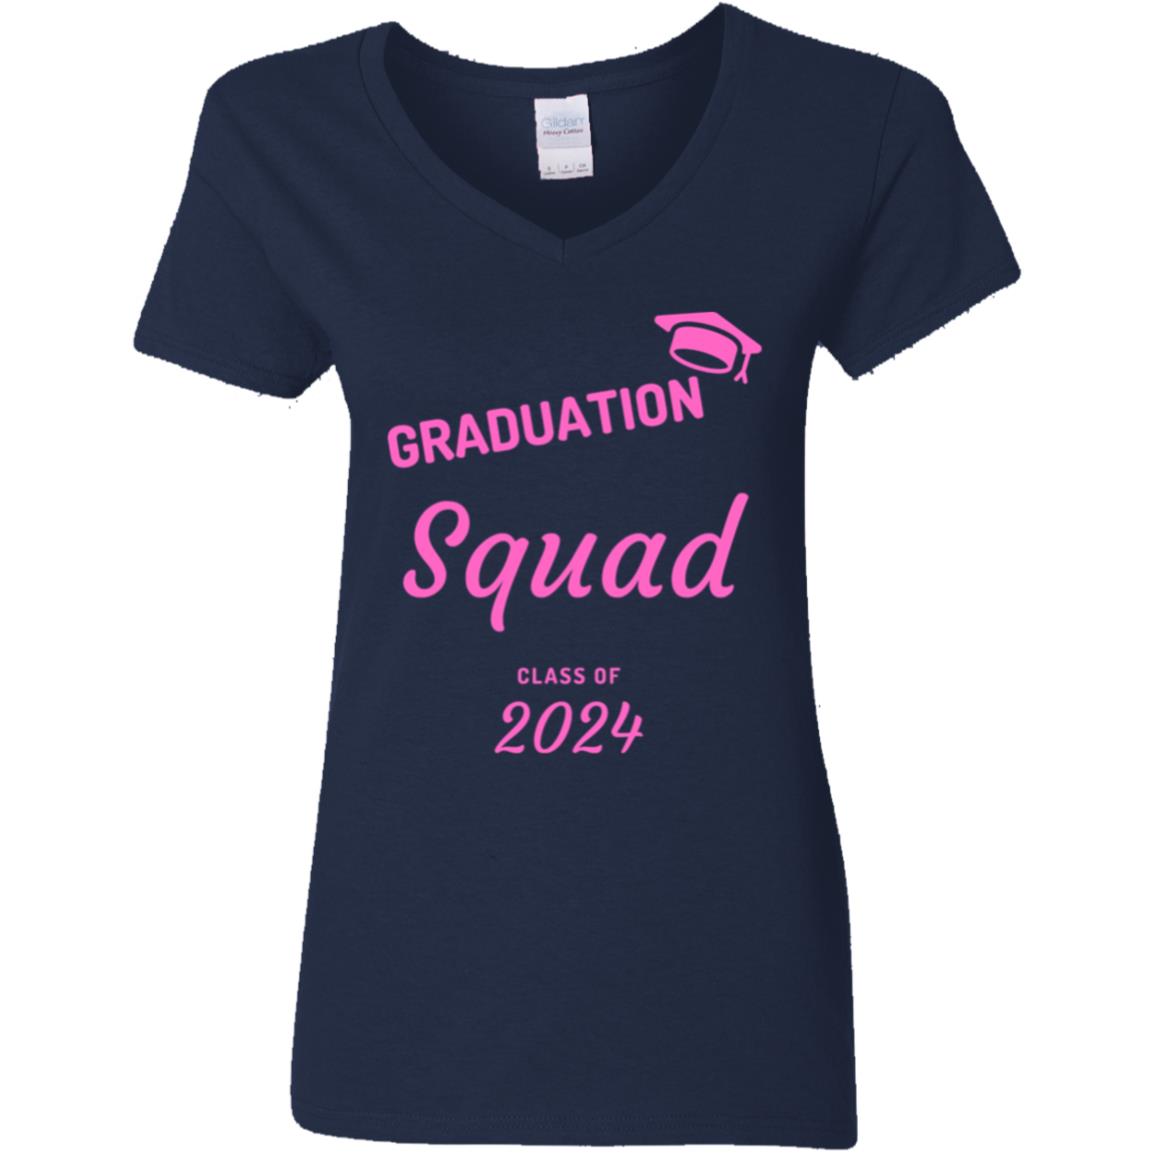 Graduation Squad 2024 pink